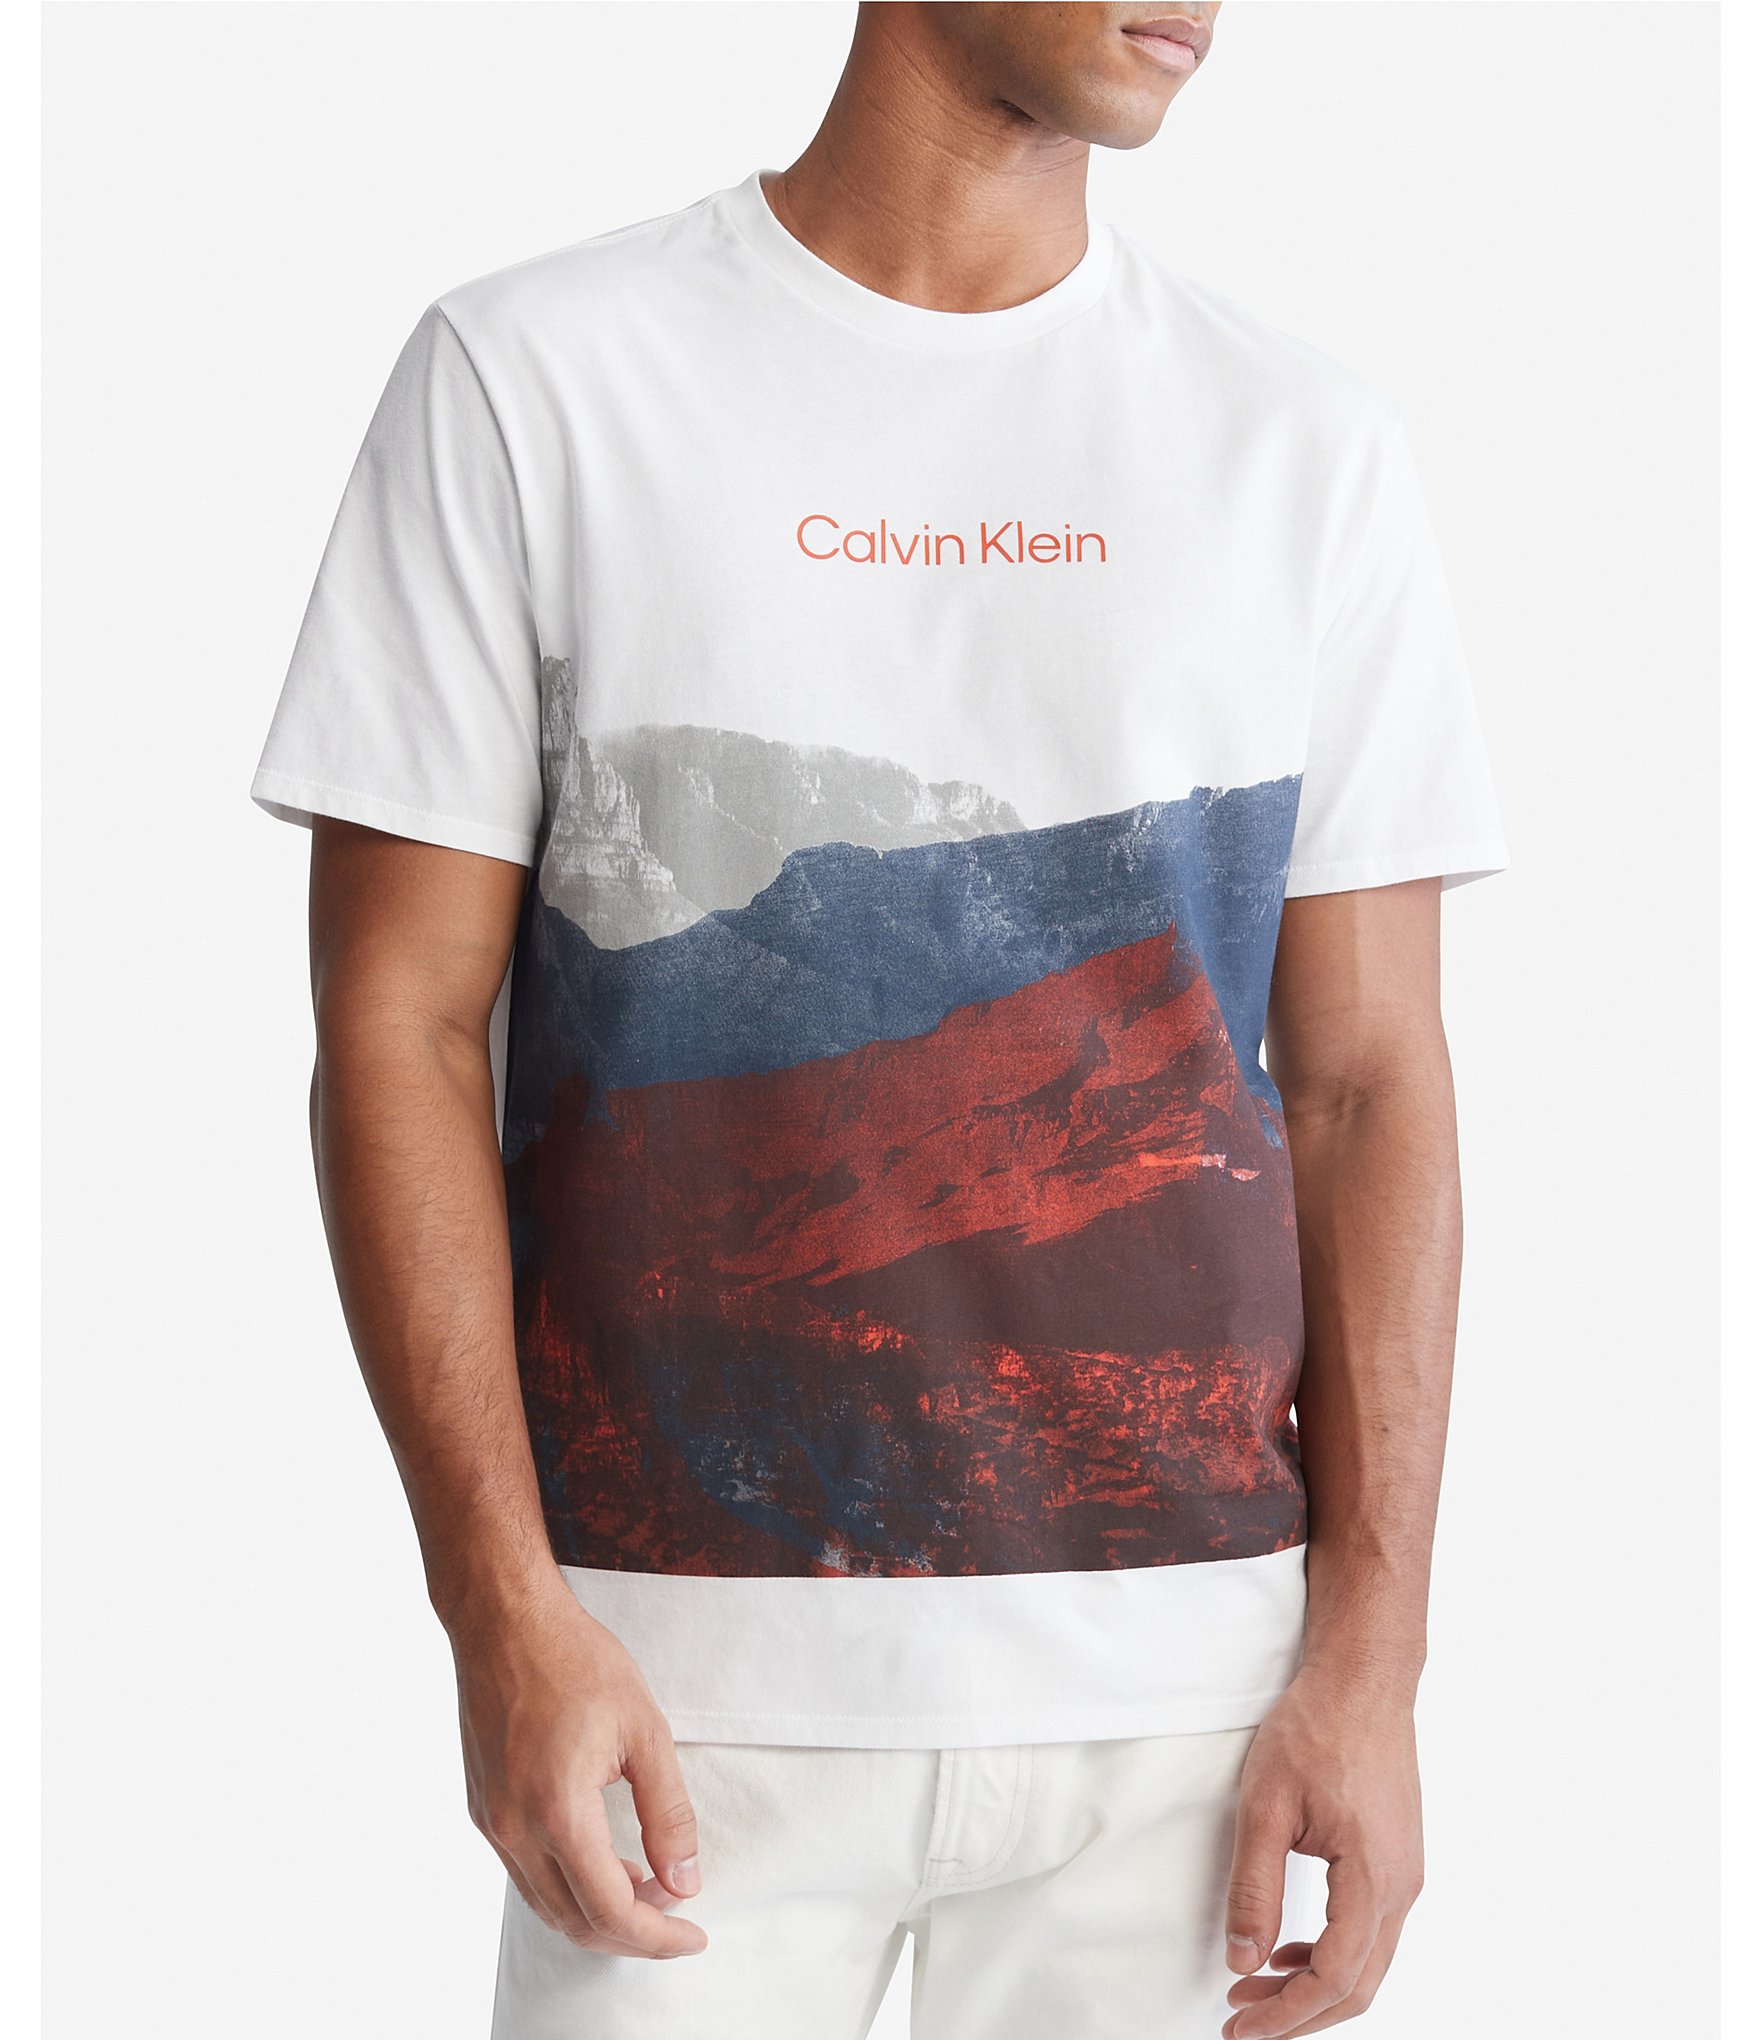 Popular Men's T-shirts From Calvin Klein